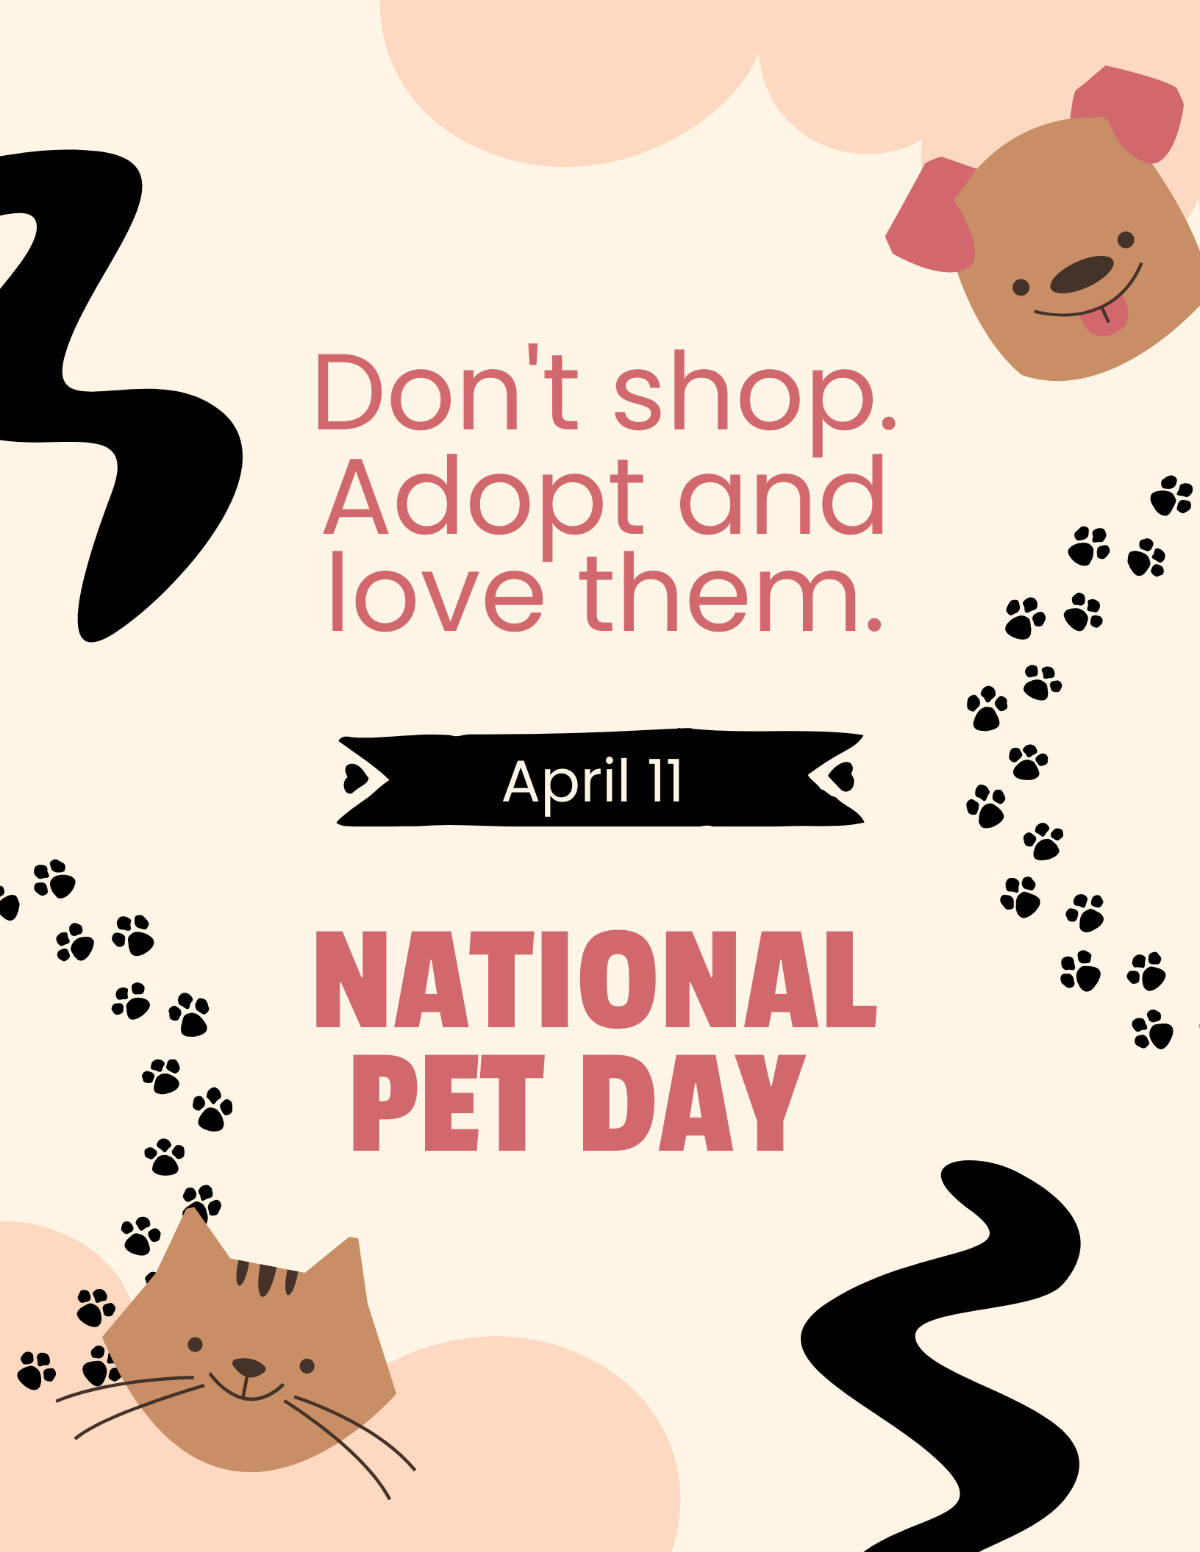 National Pet Day Marketing